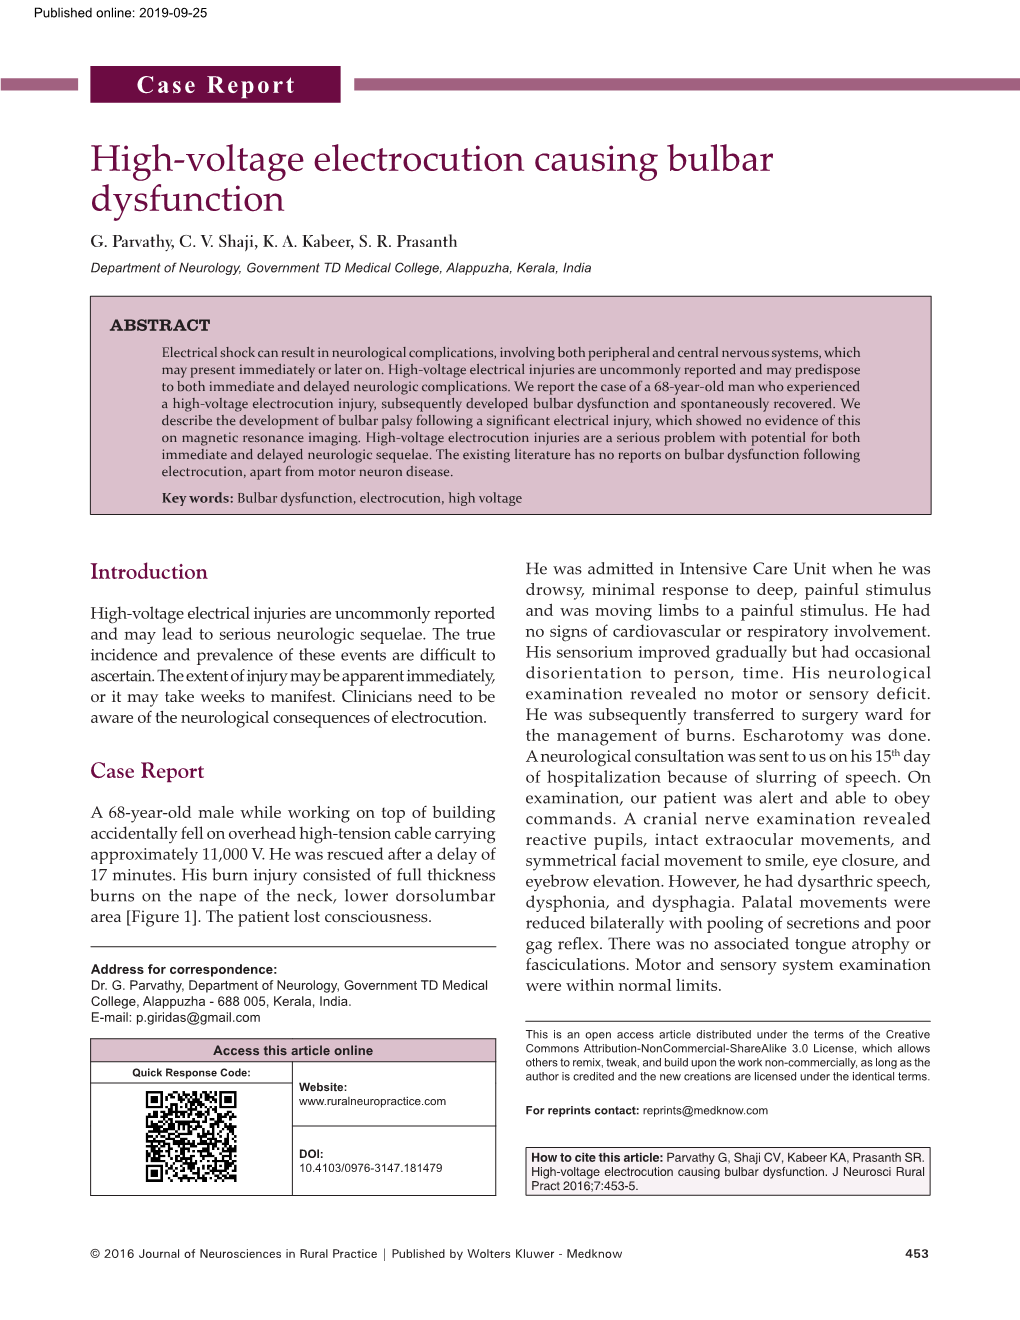 High-Voltage Electrocution Causing Bulbar Dysfunction